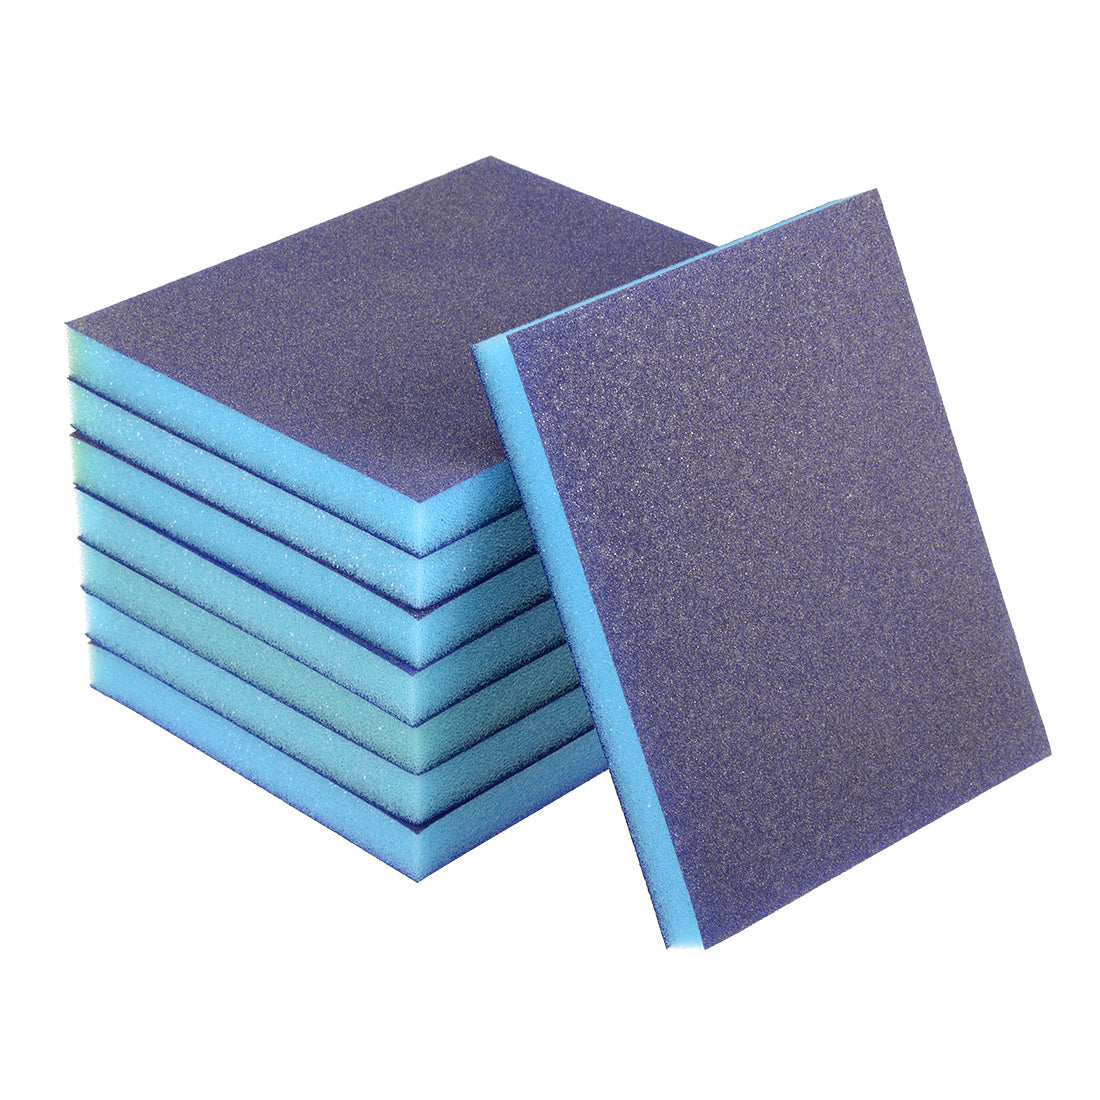 uxcell Uxcell Sanding Sponge, Medium Grit 120 Grit Sanding Block Pad, 4.72" x 3.86" x 0.47" Size 8pcs